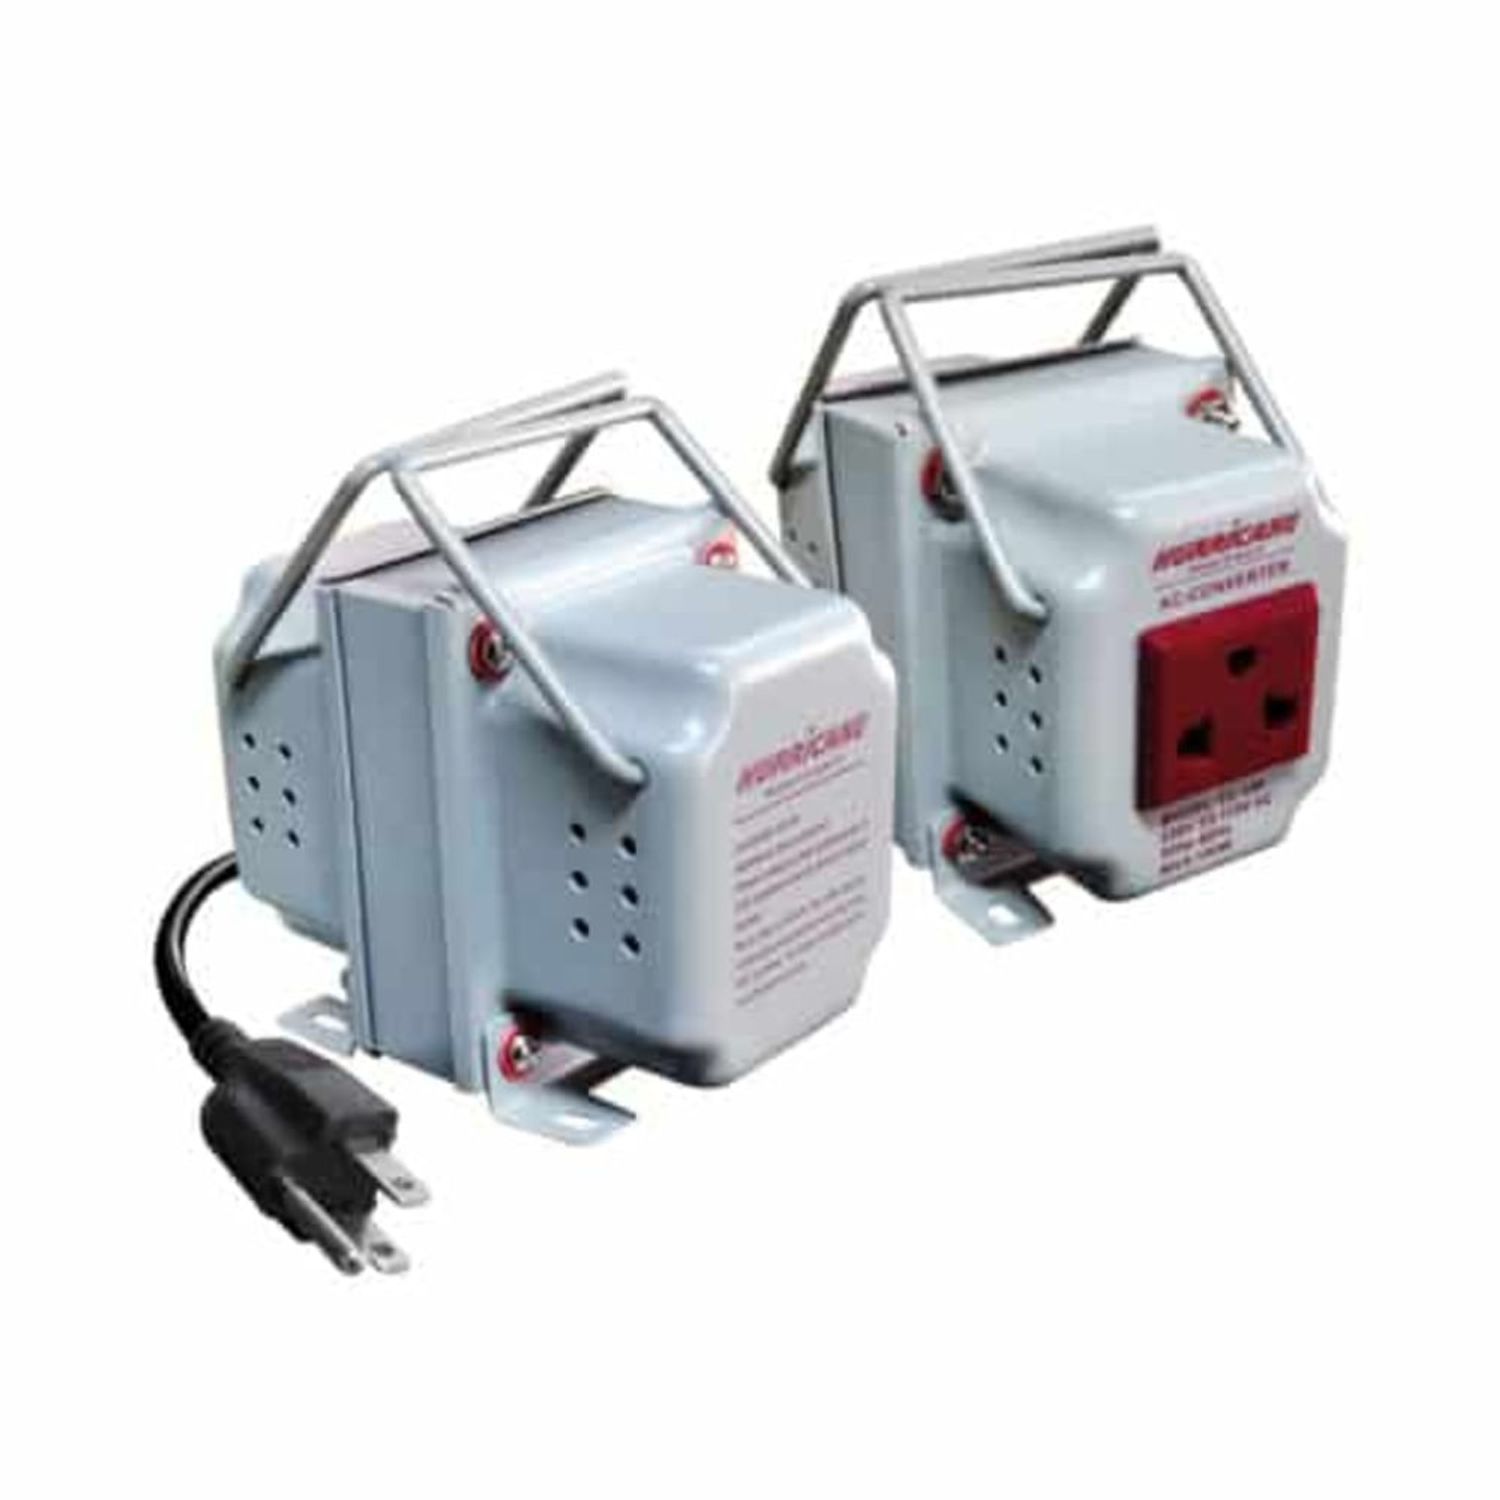 Transformador Voltaje (220V A 110V) Potencia 1500 Watts TC-1500 I Oechsle -  Oechsle